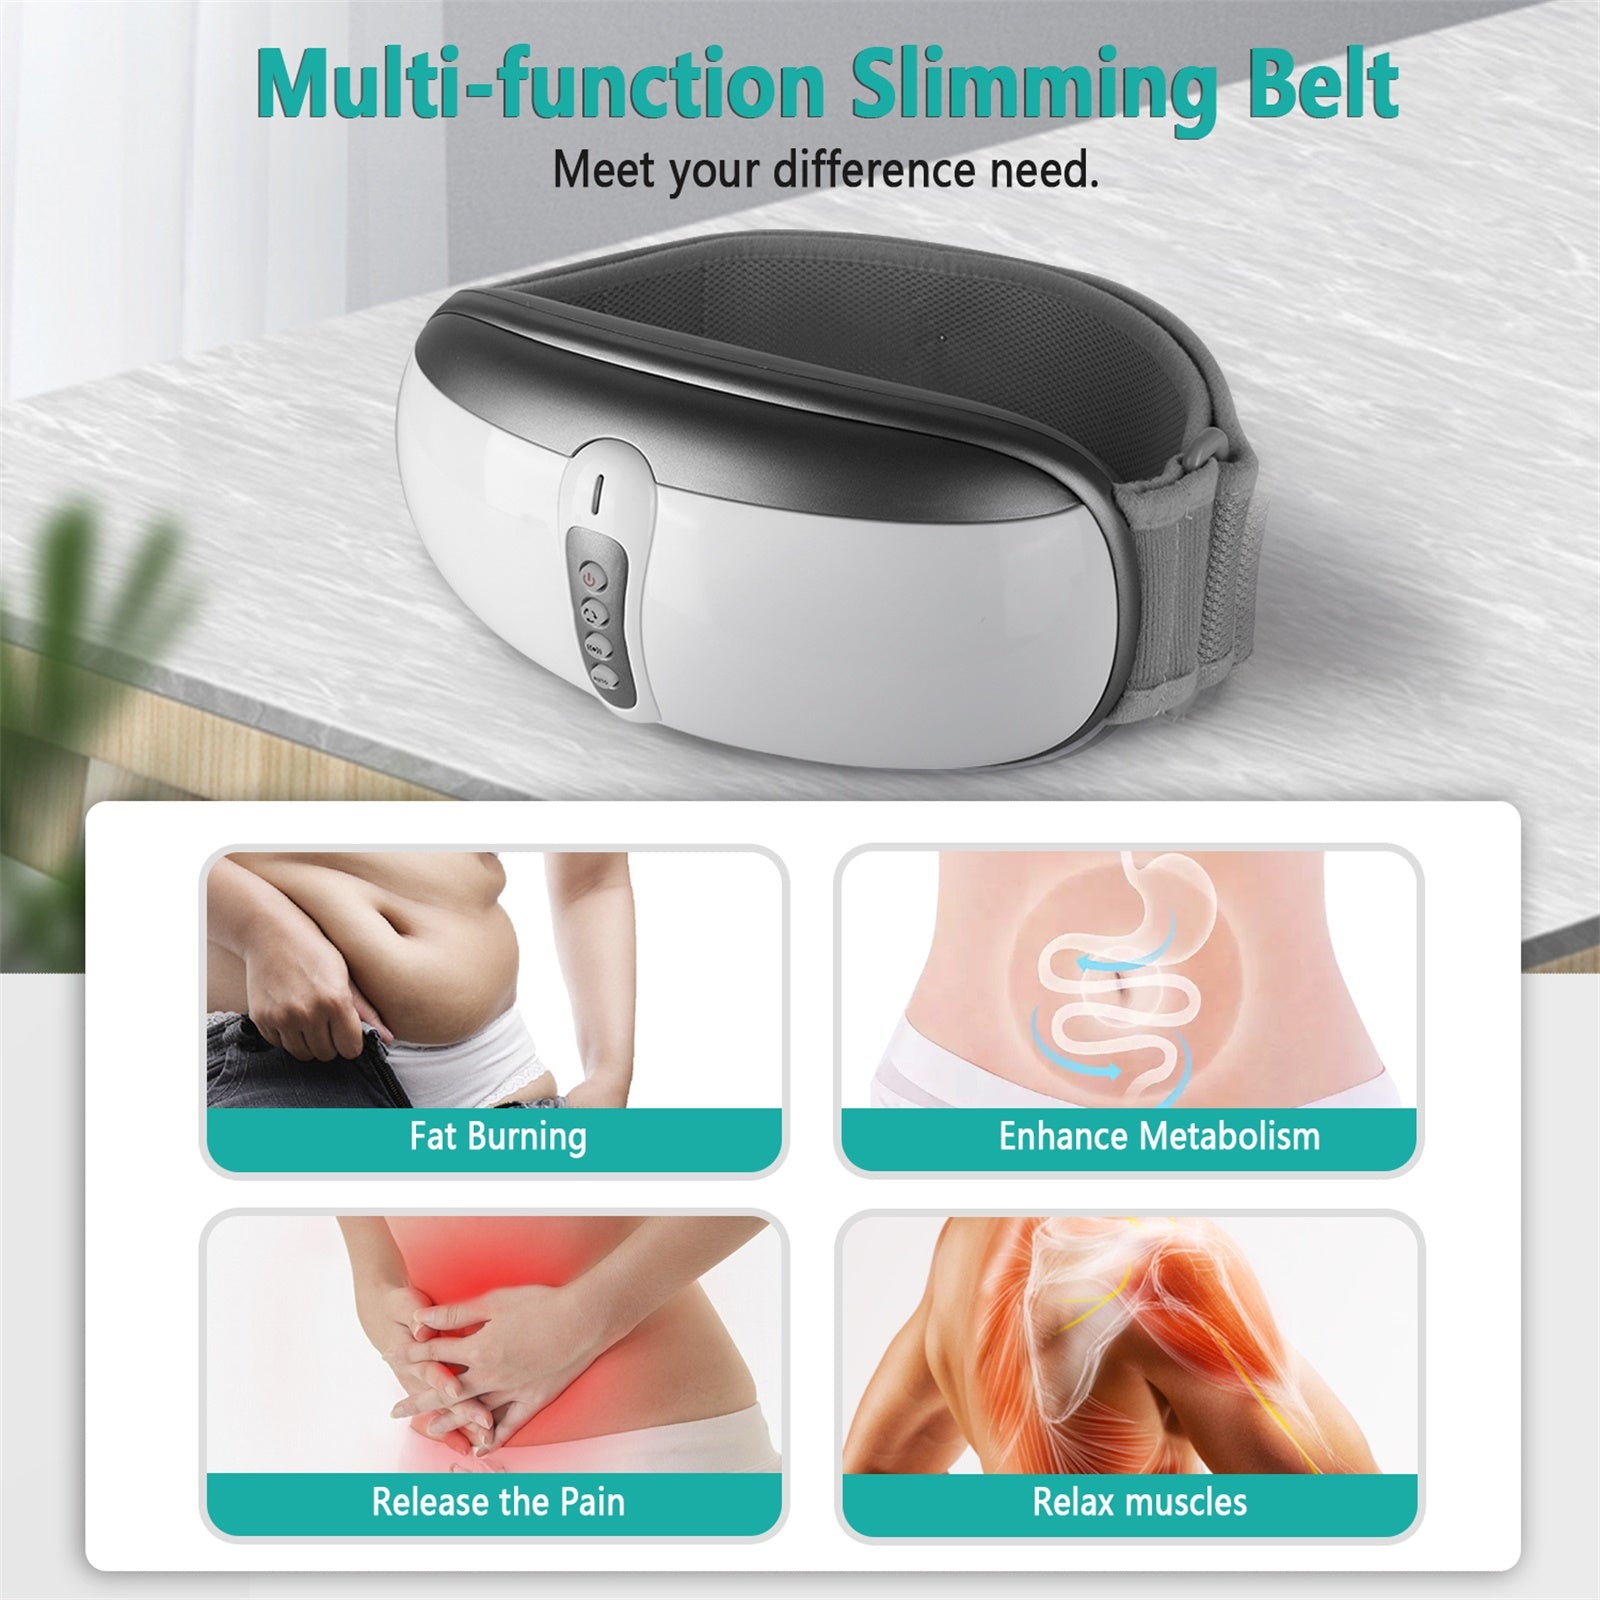 Multi - function slimming belt - rilassa